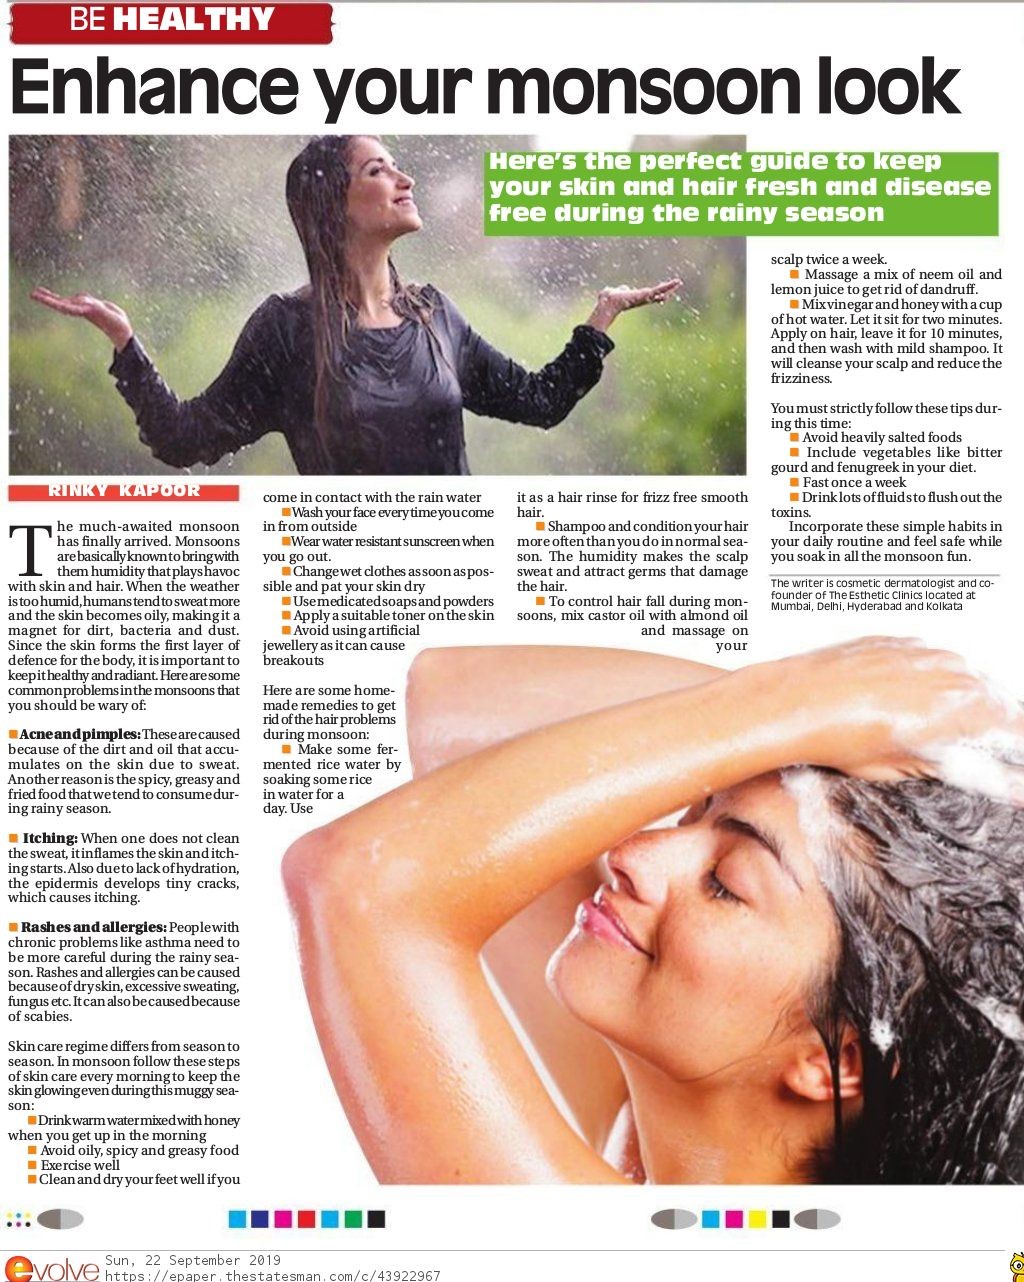 Enhance Your Monsoon Look - The Statesman Evolve - Rinky Kapoor